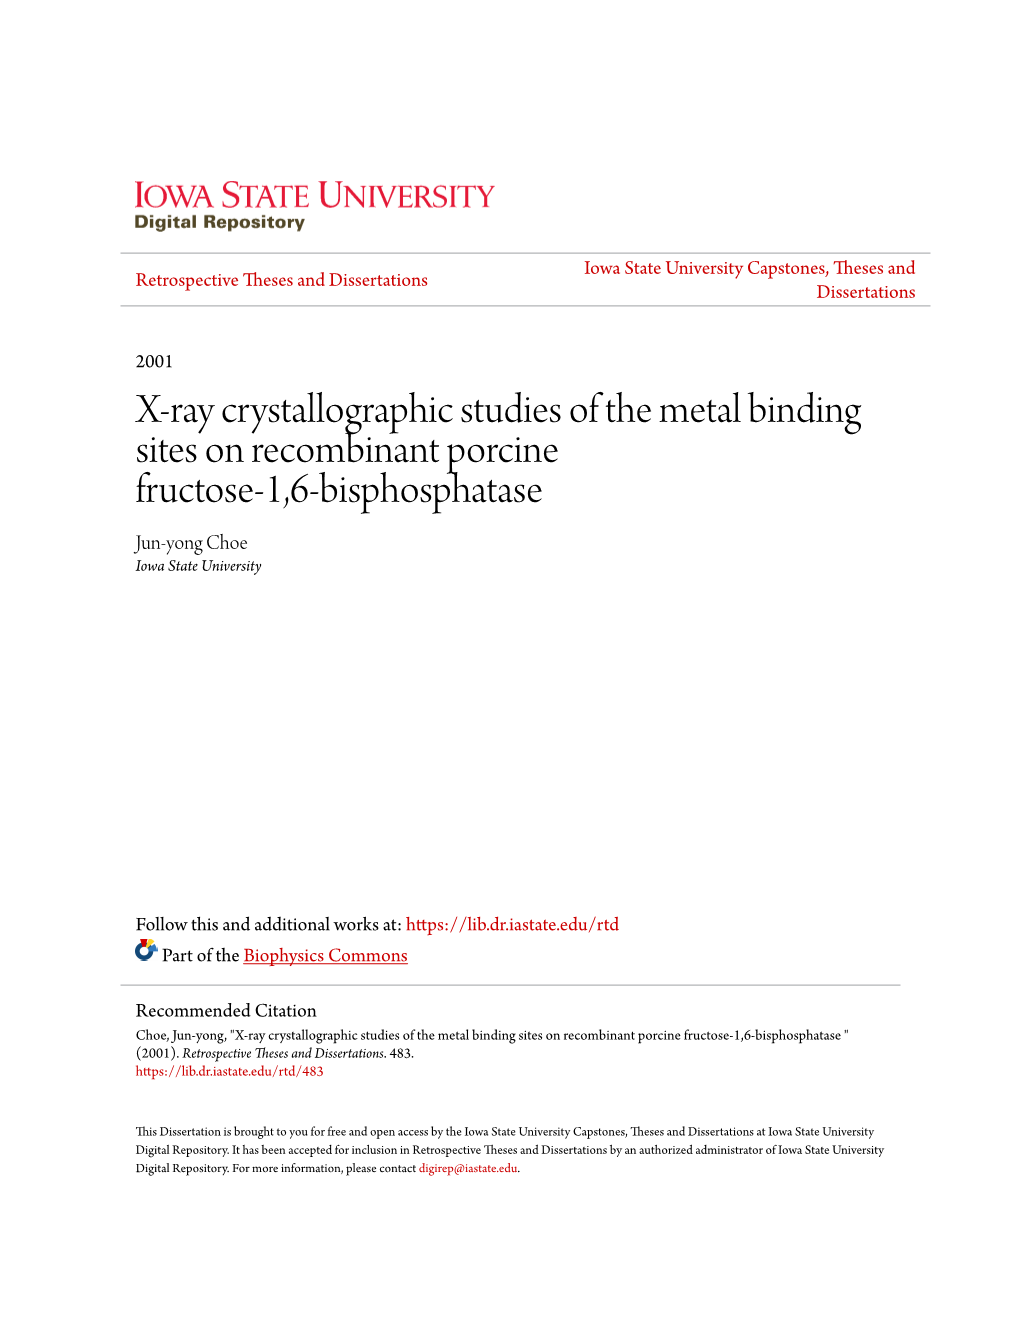 X-Ray Crystallographic Studies of the Metal Binding Sites on Recombinant Porcine Fructose-1,6-Bisphosphatase Jun-Yong Choe Iowa State University